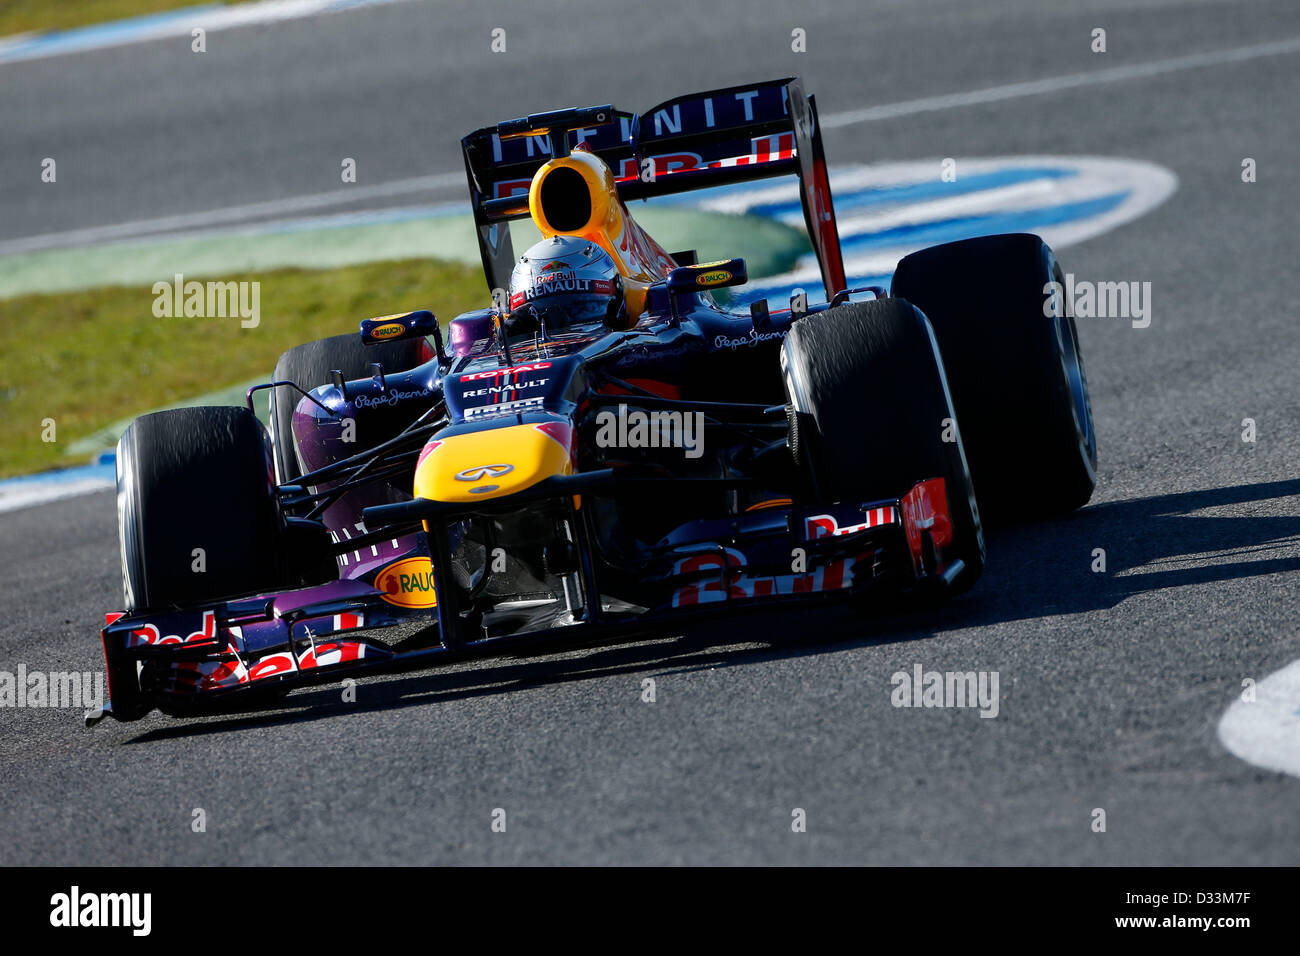 Motorsports: FIA Formula One World Championship 2013, F1 Test Jerez, #1 Sebastian Vettel (GER, Red Bull Racing), Foto Stock